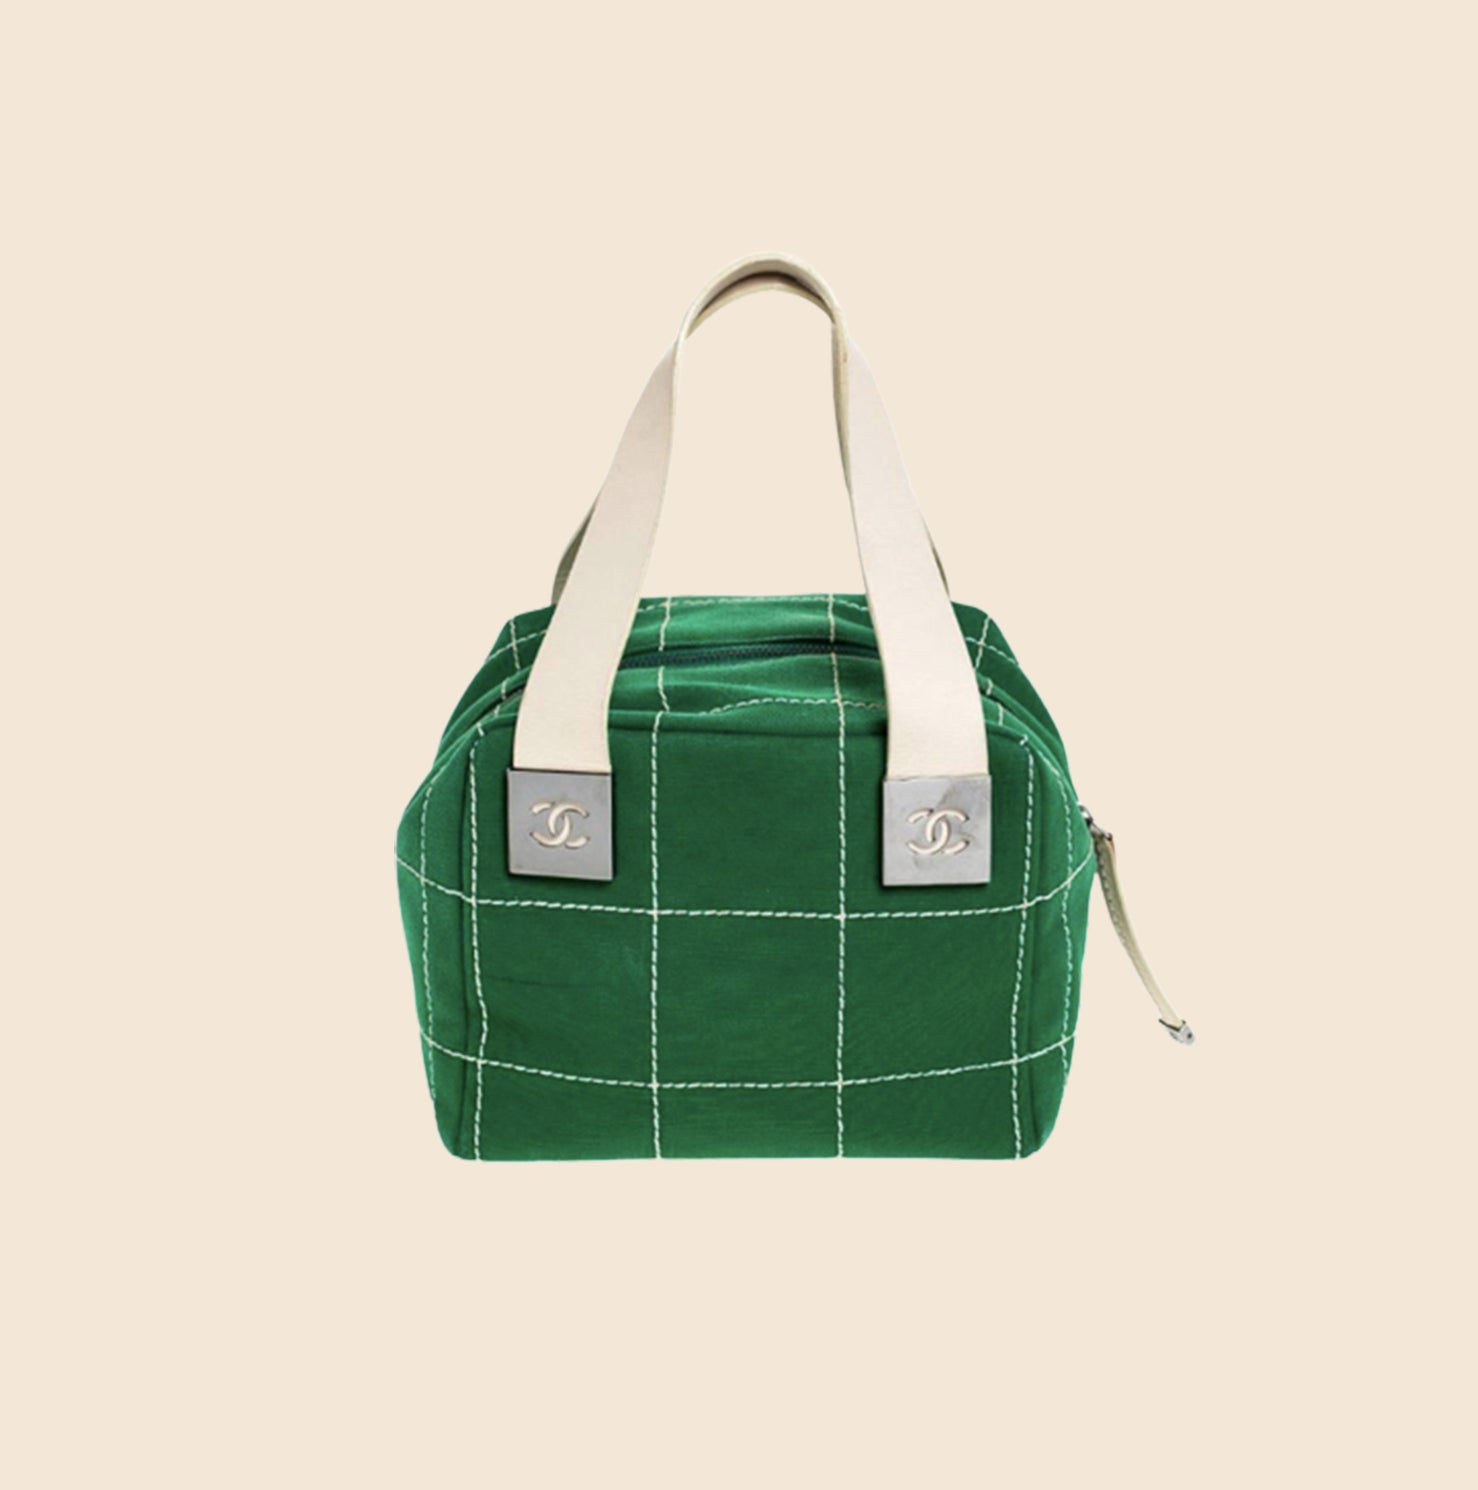 emerald green chanel bag